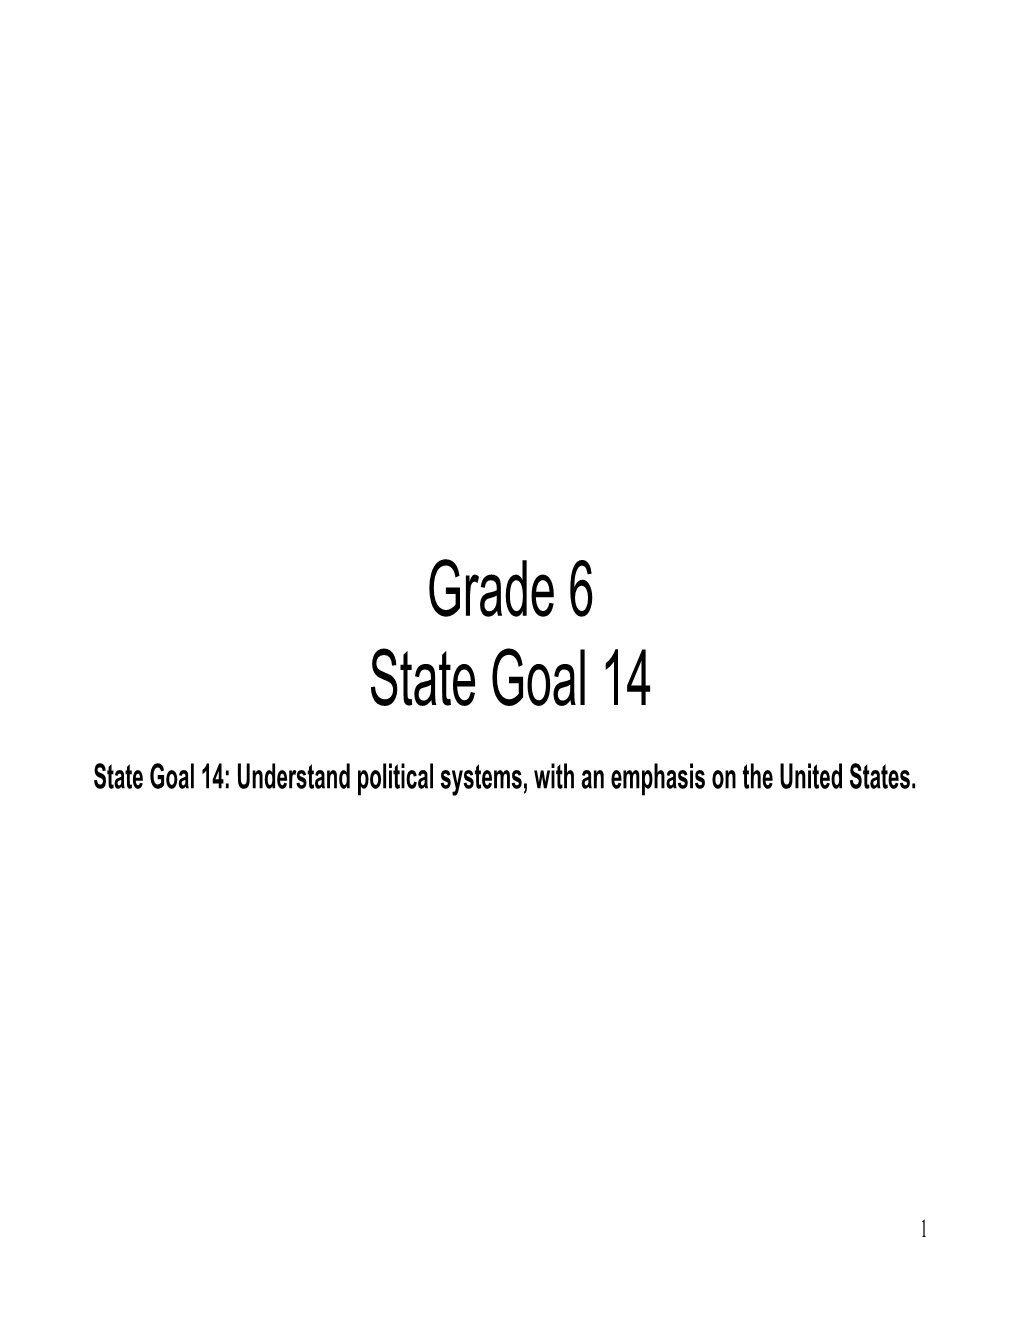 Grade 6 State Goal 14